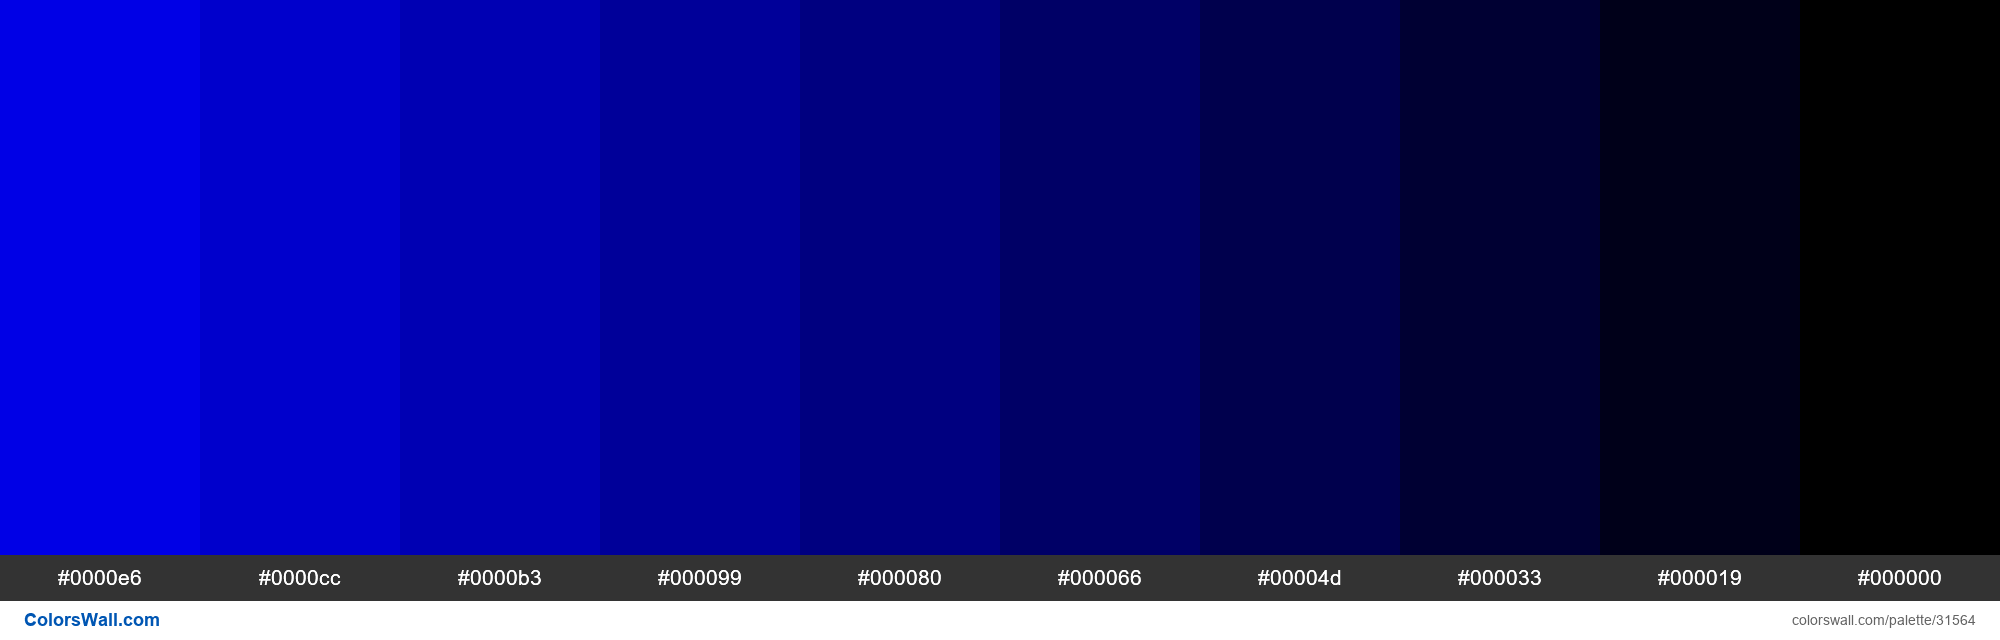 Shades X11 color Blue #0000FF hex - ColorsWall